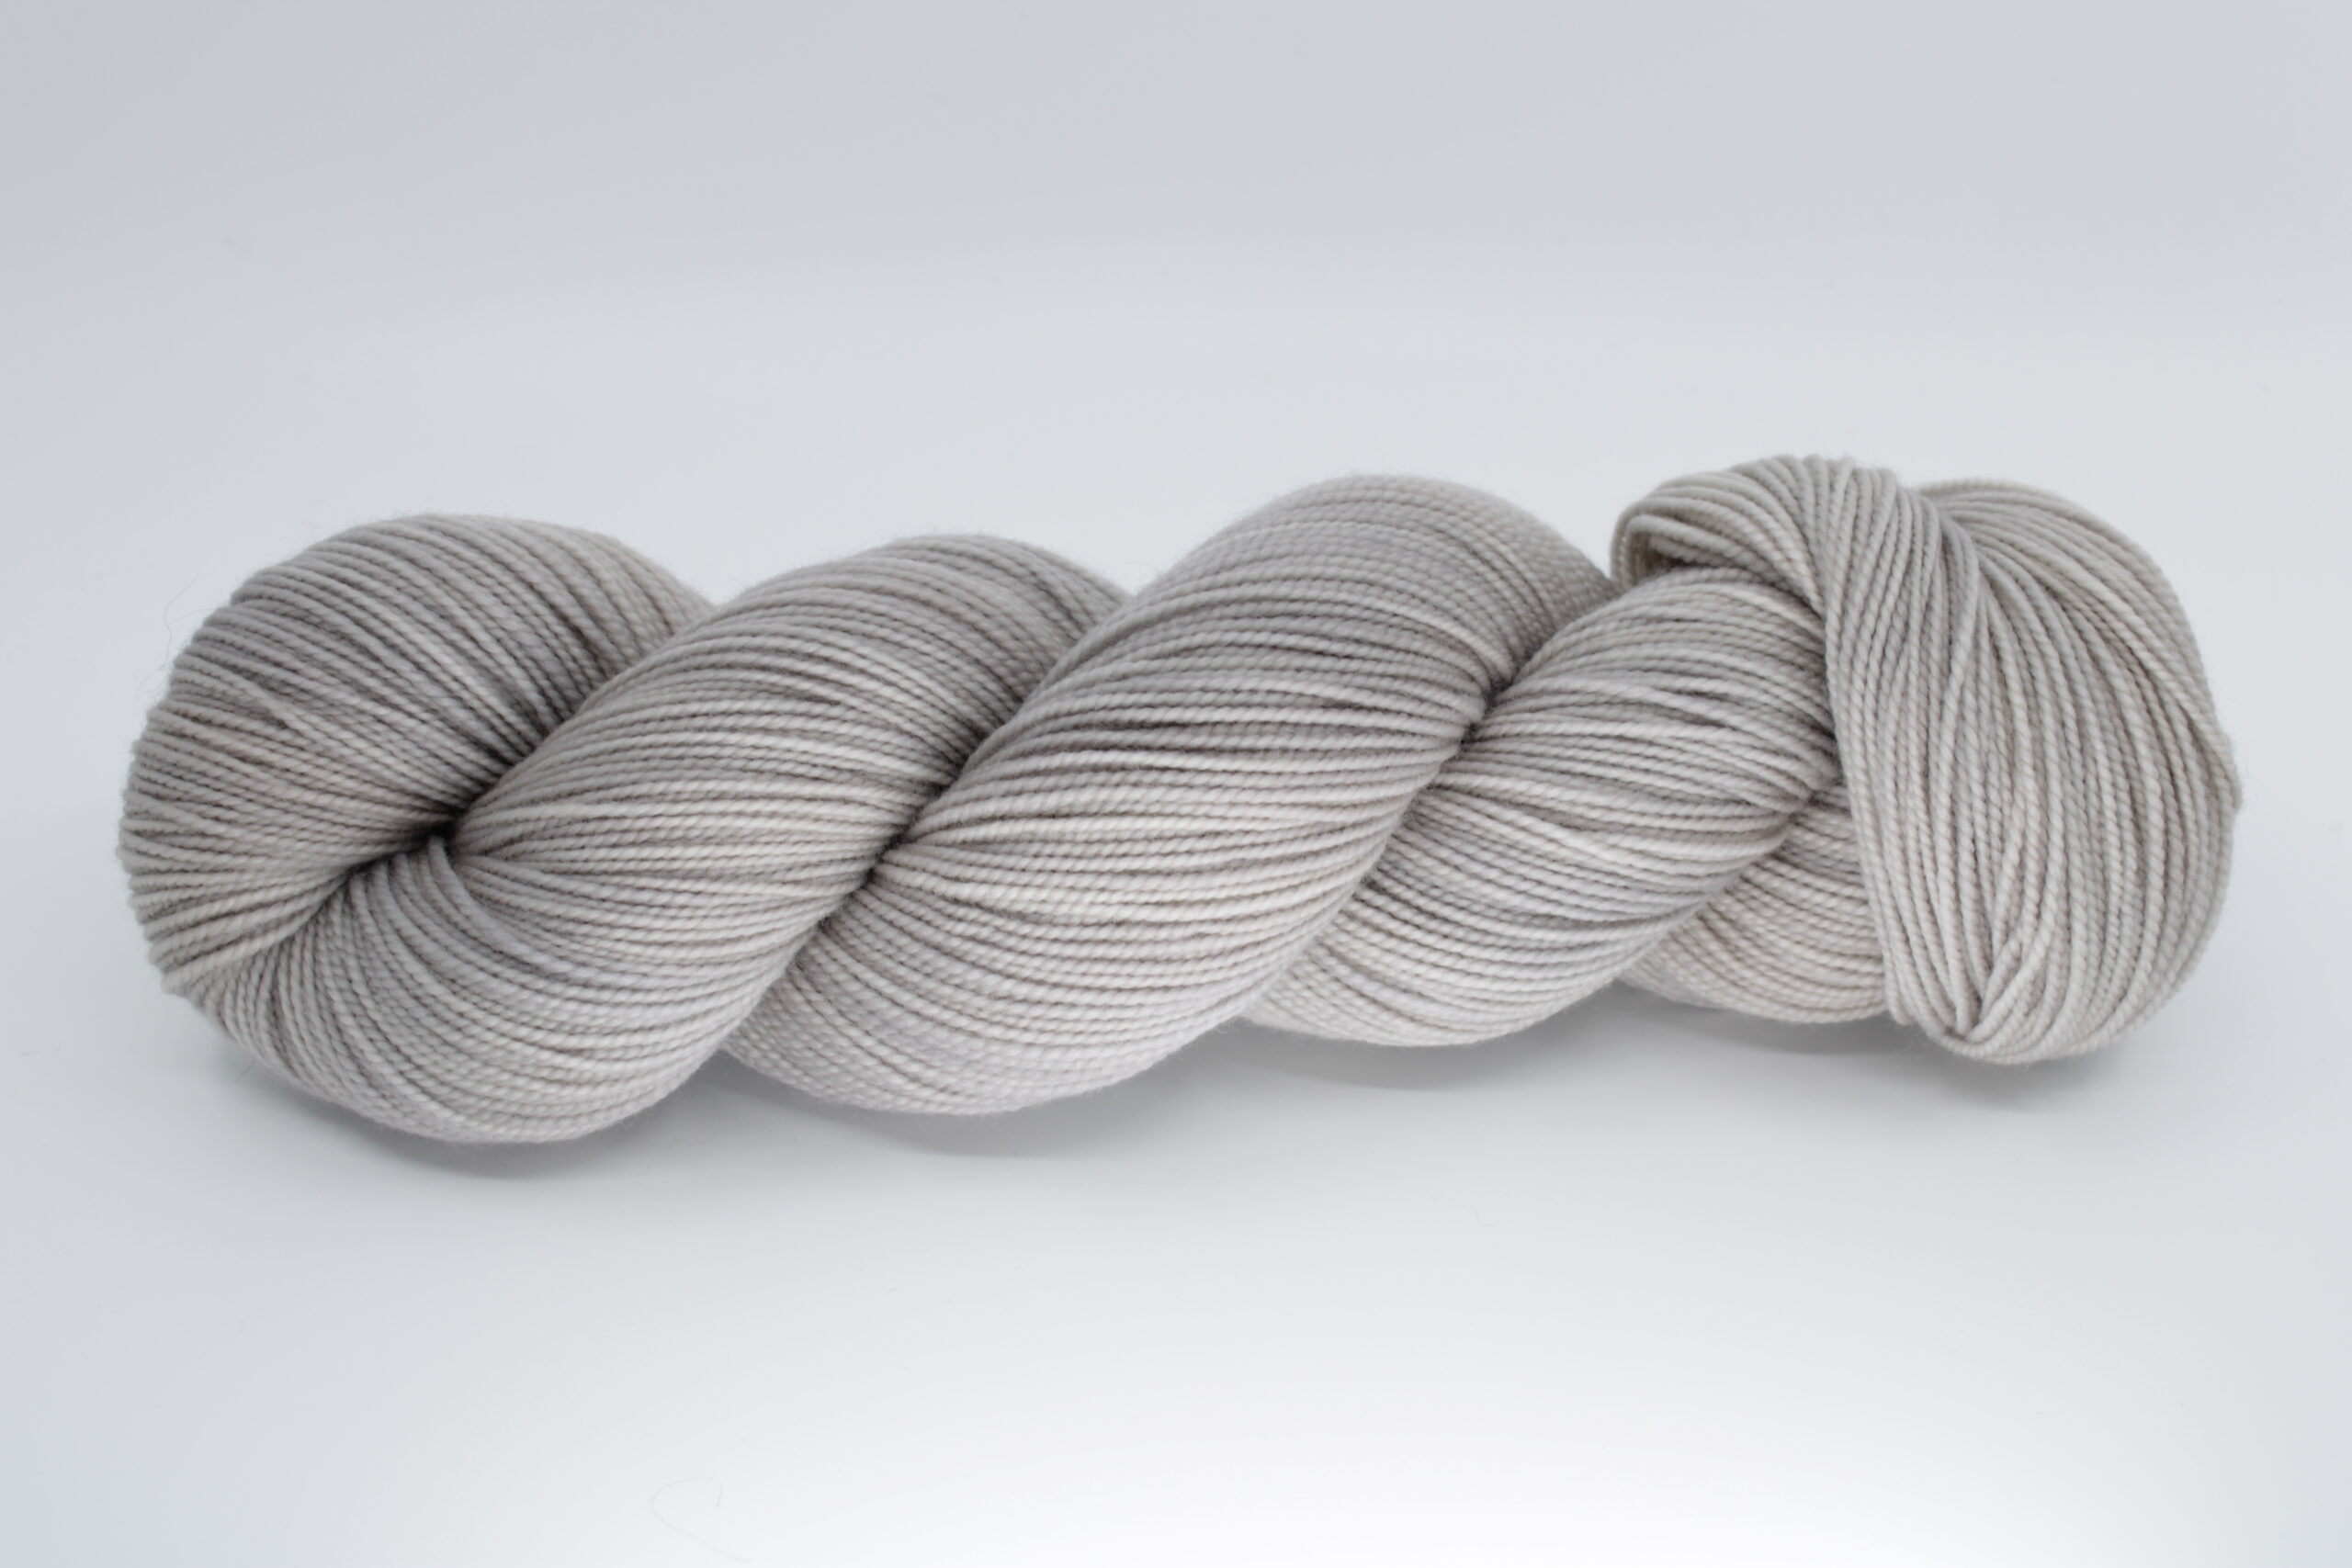 Flocon base - fingering. Untreated wool, composition: 100% merino. Color: gray-beige. Color: Greg.